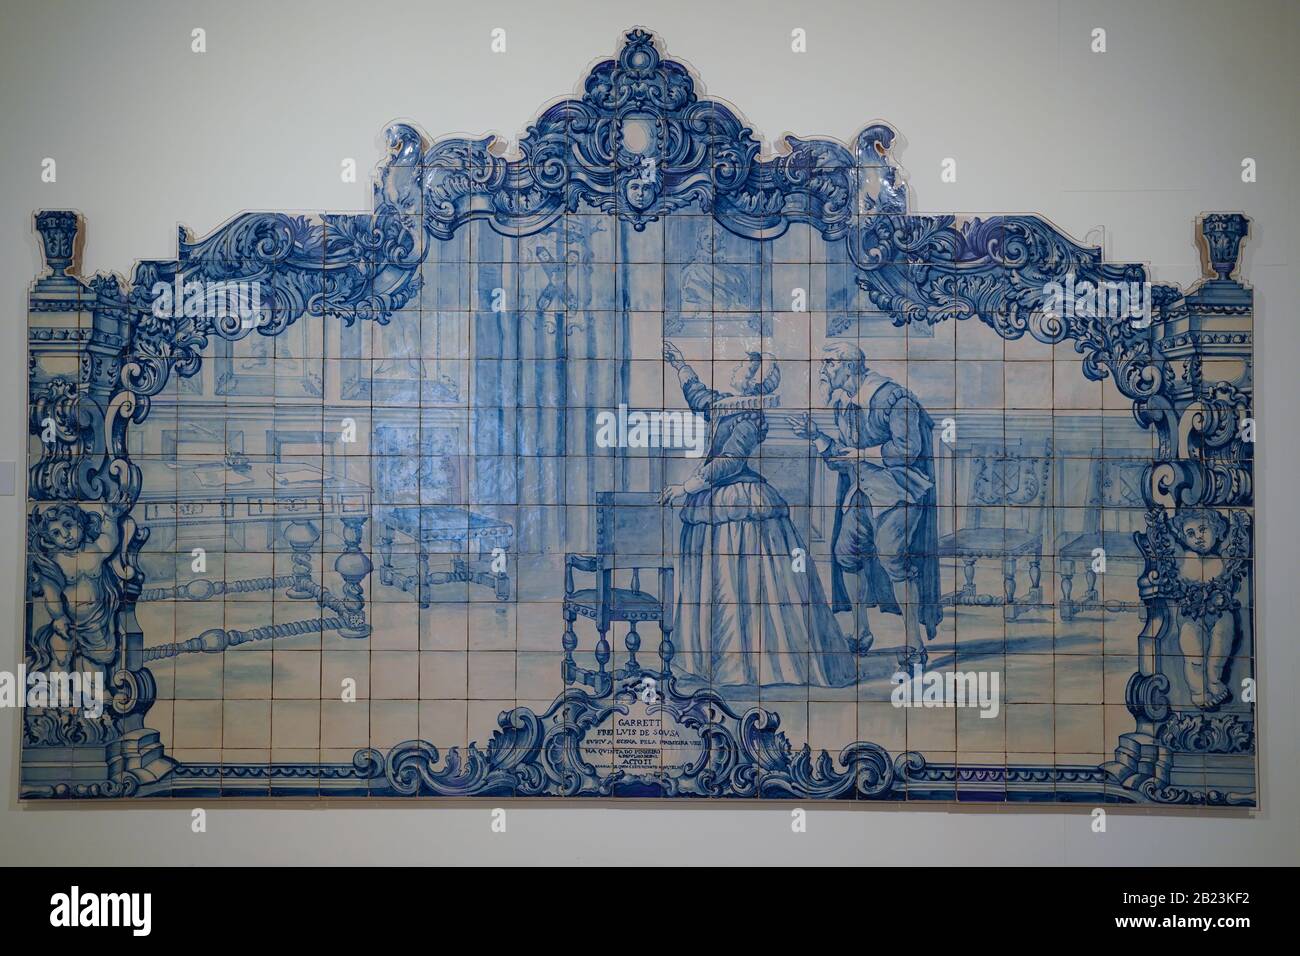 Painel de Azulejos (Azulejos-Gremium) im Museum Nacional do Azulejo (Nationales Fliesenmuseum), einem berühmten Kultur- und Kunstmuseum in Lissabon Portugal Stockfoto